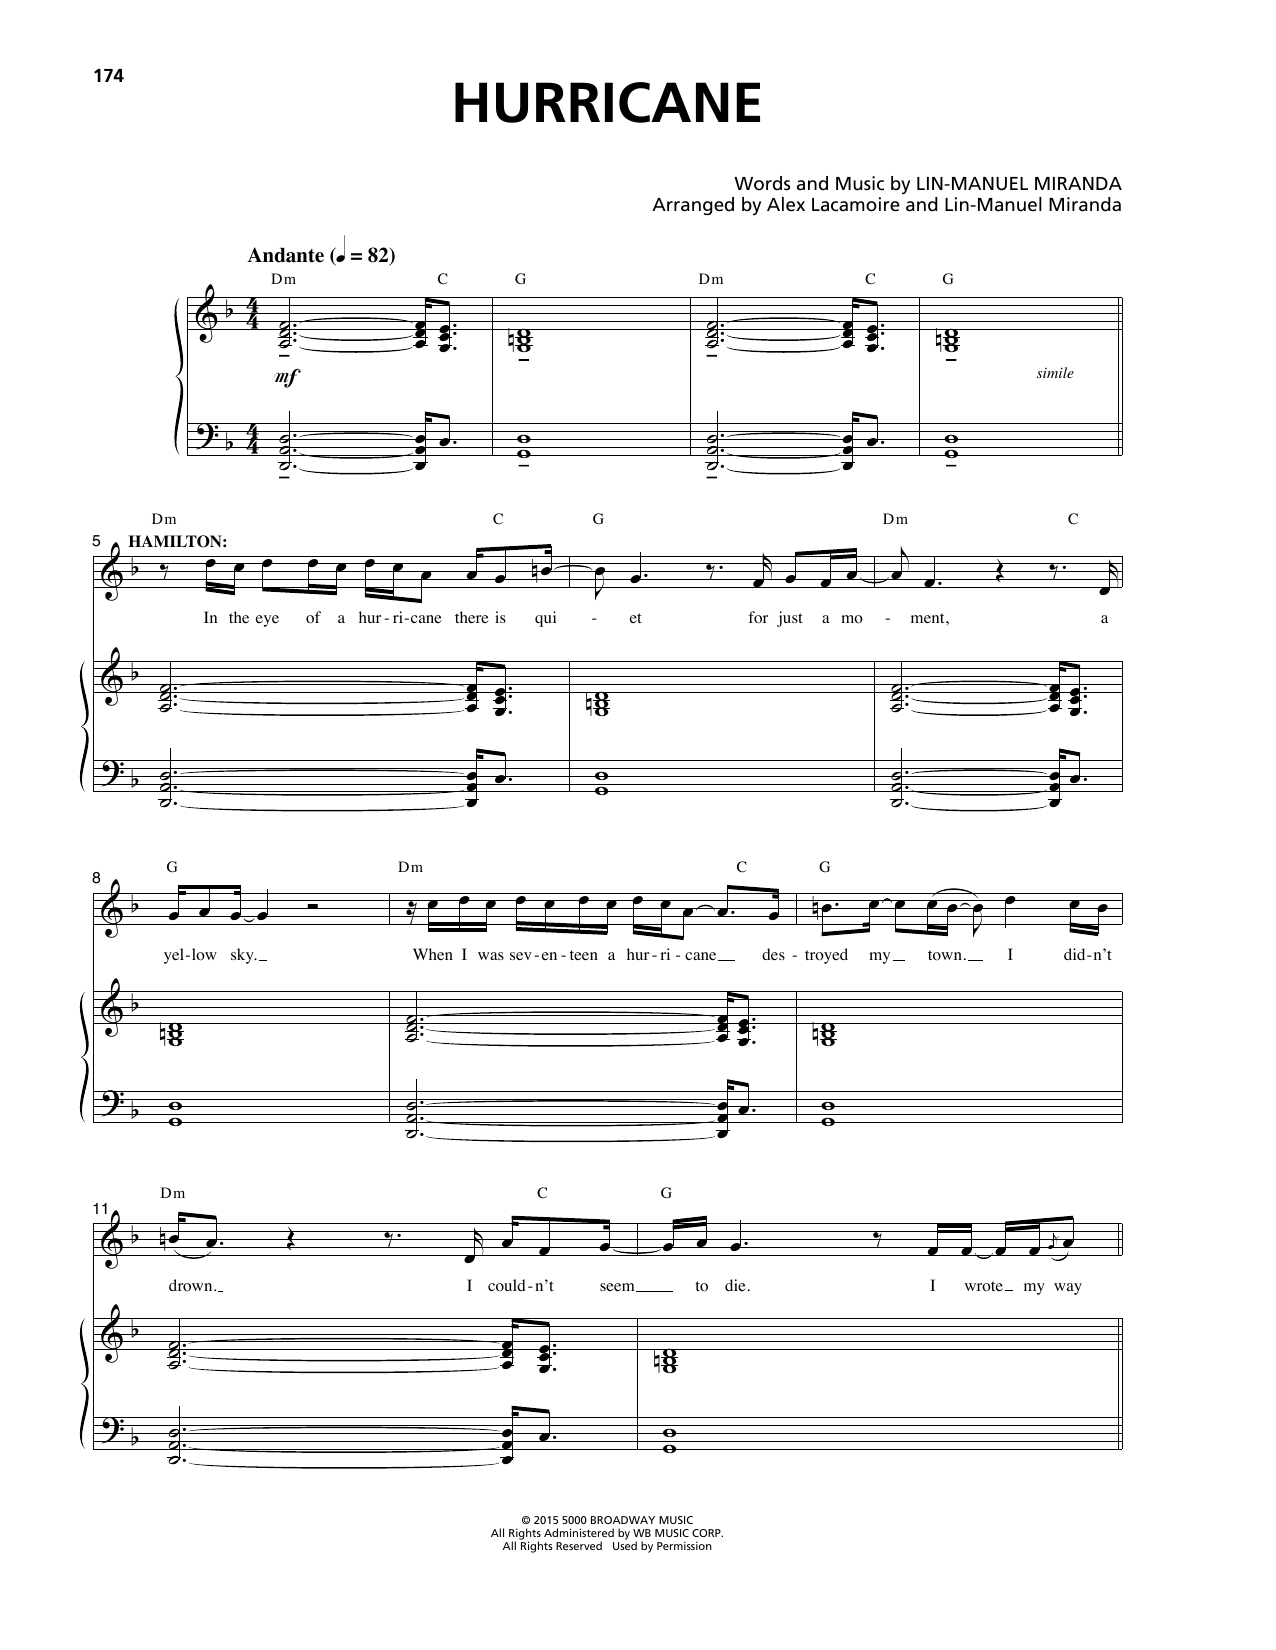 Download Lin-Manuel Miranda Hurricane Sheet Music and learn how to play Lyrics & Chords PDF digital score in minutes